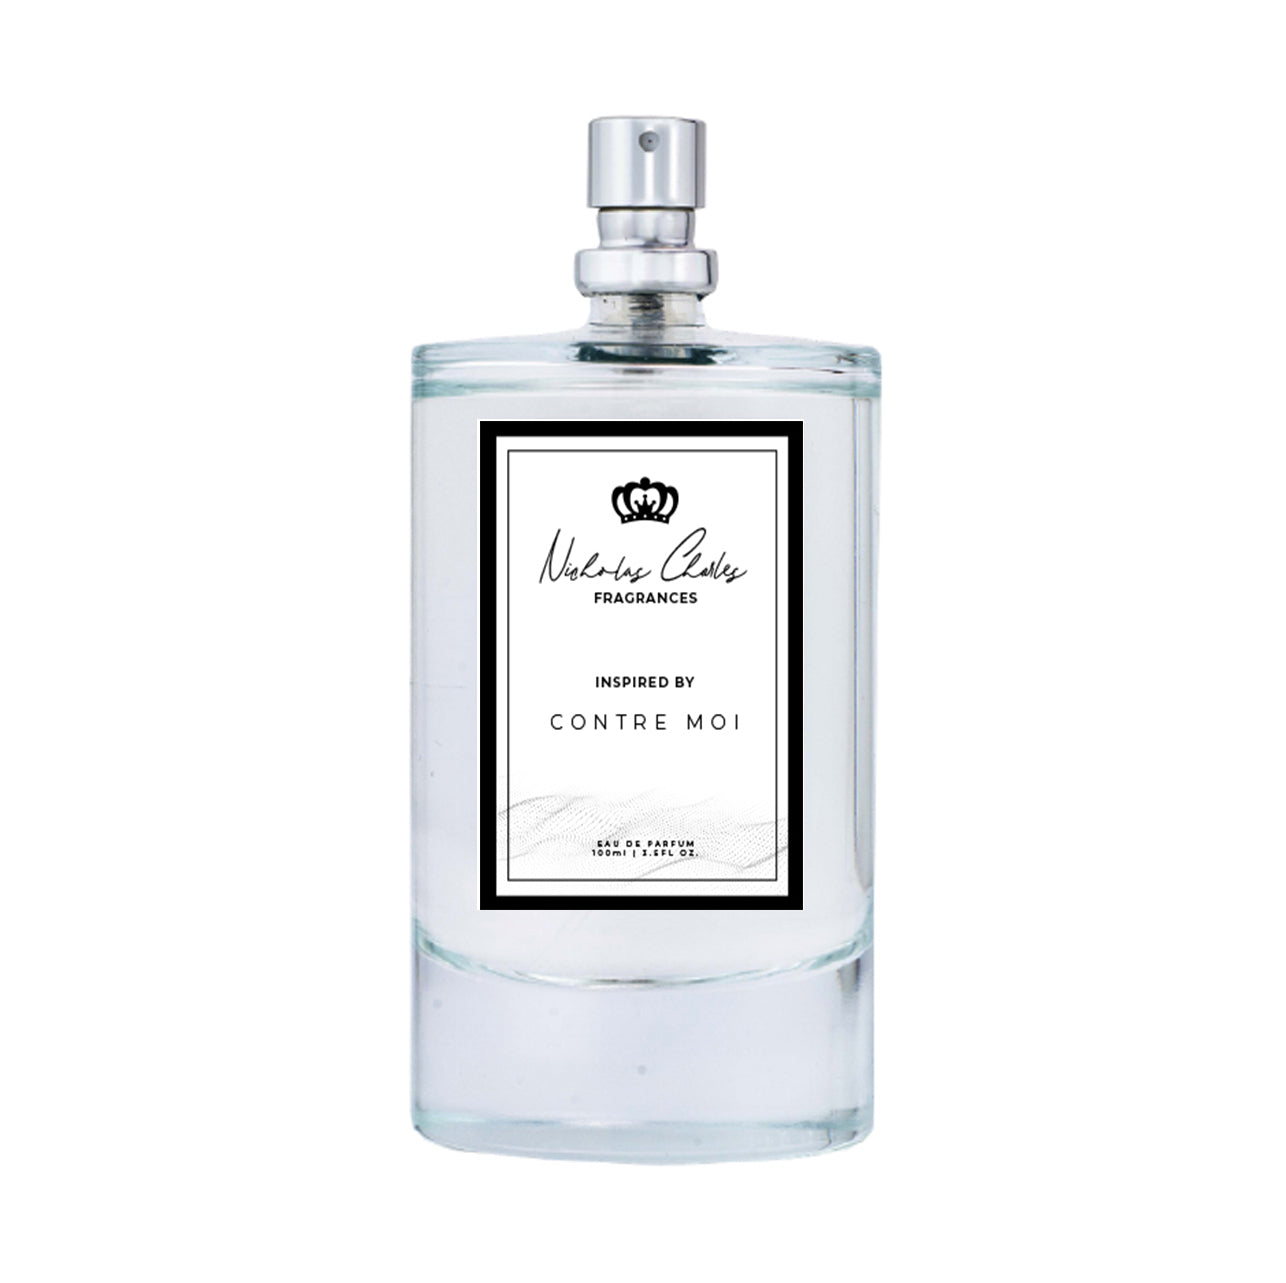 Louis Vuitton CONTRE MOI EDP 100ml Ladies - Discounted Perfume House